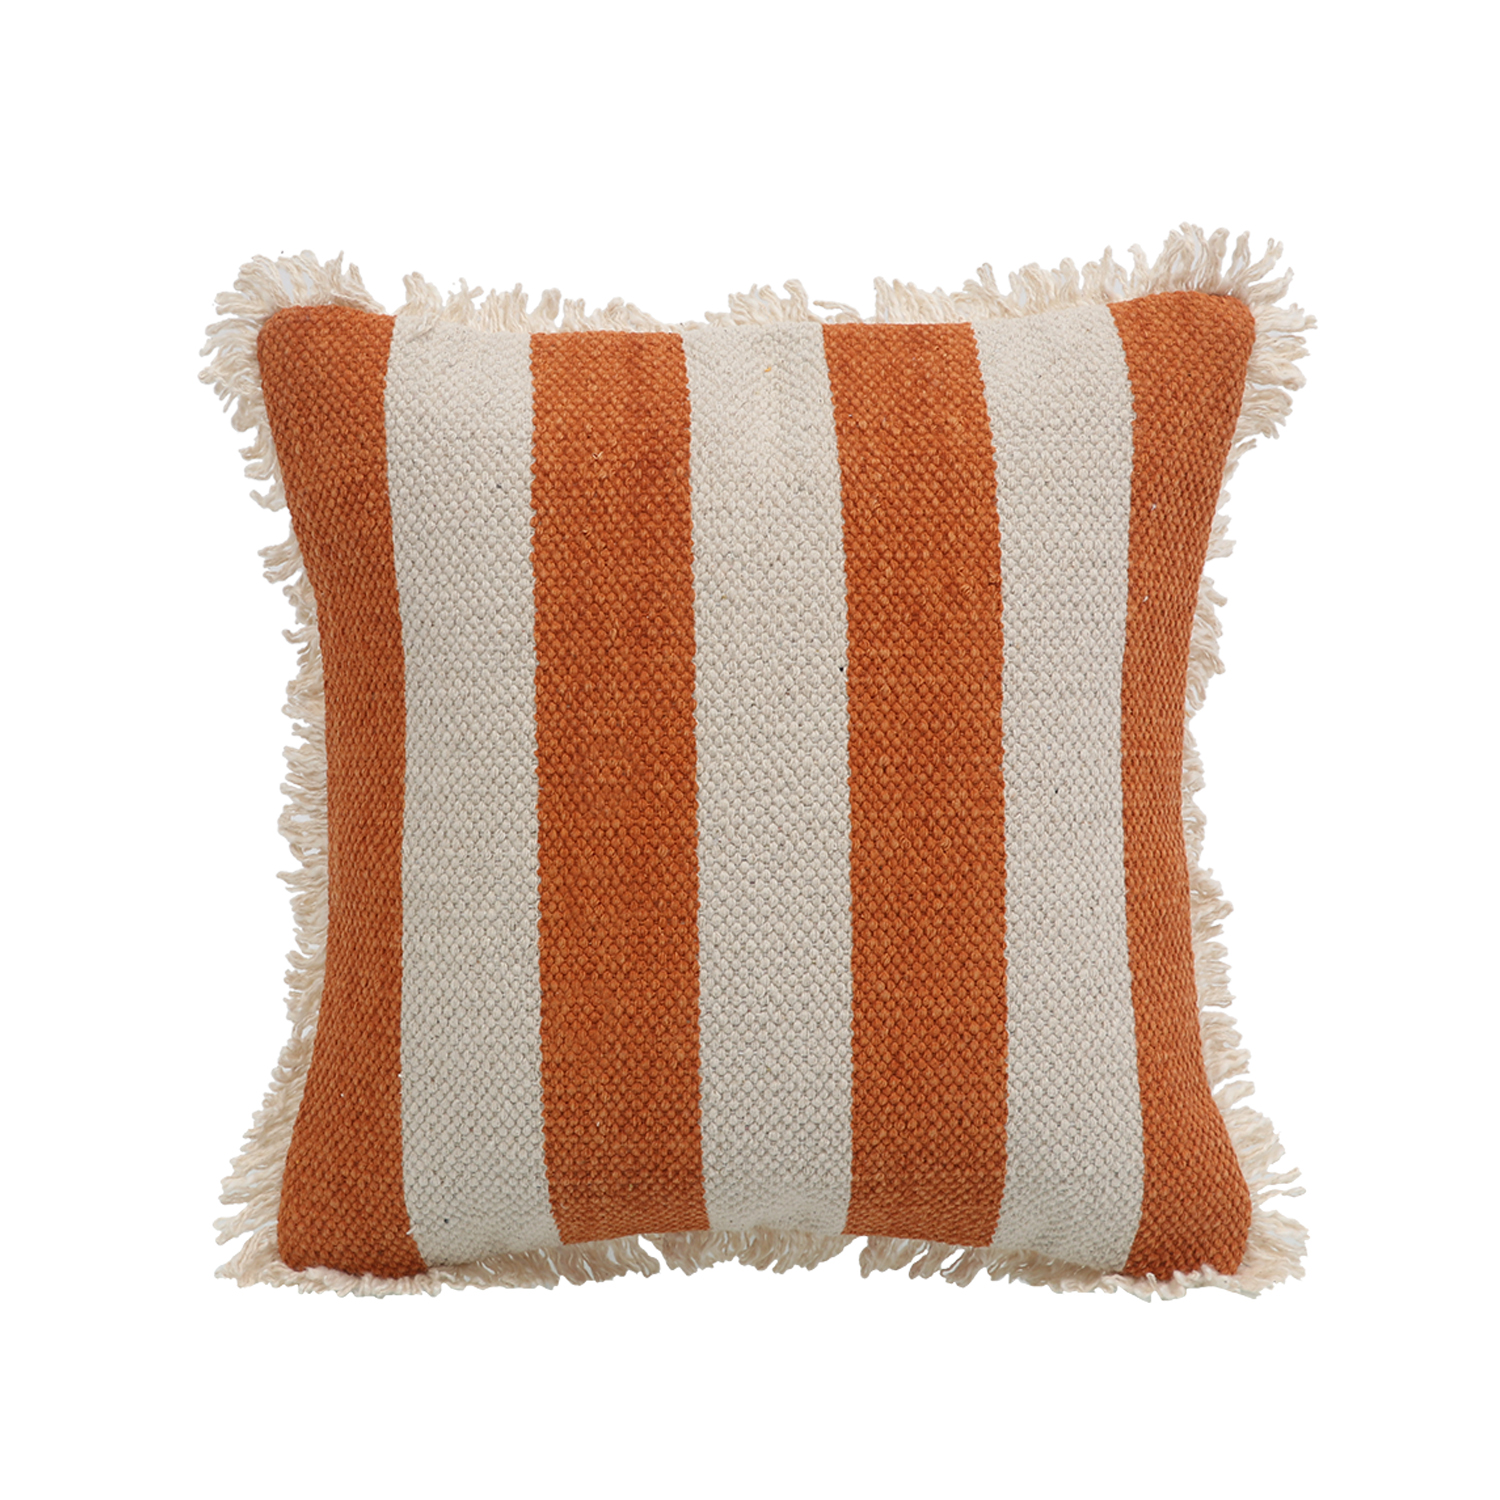 Printed Stripe Dark Orange Cushions Covers with fringes 14X14 Inch